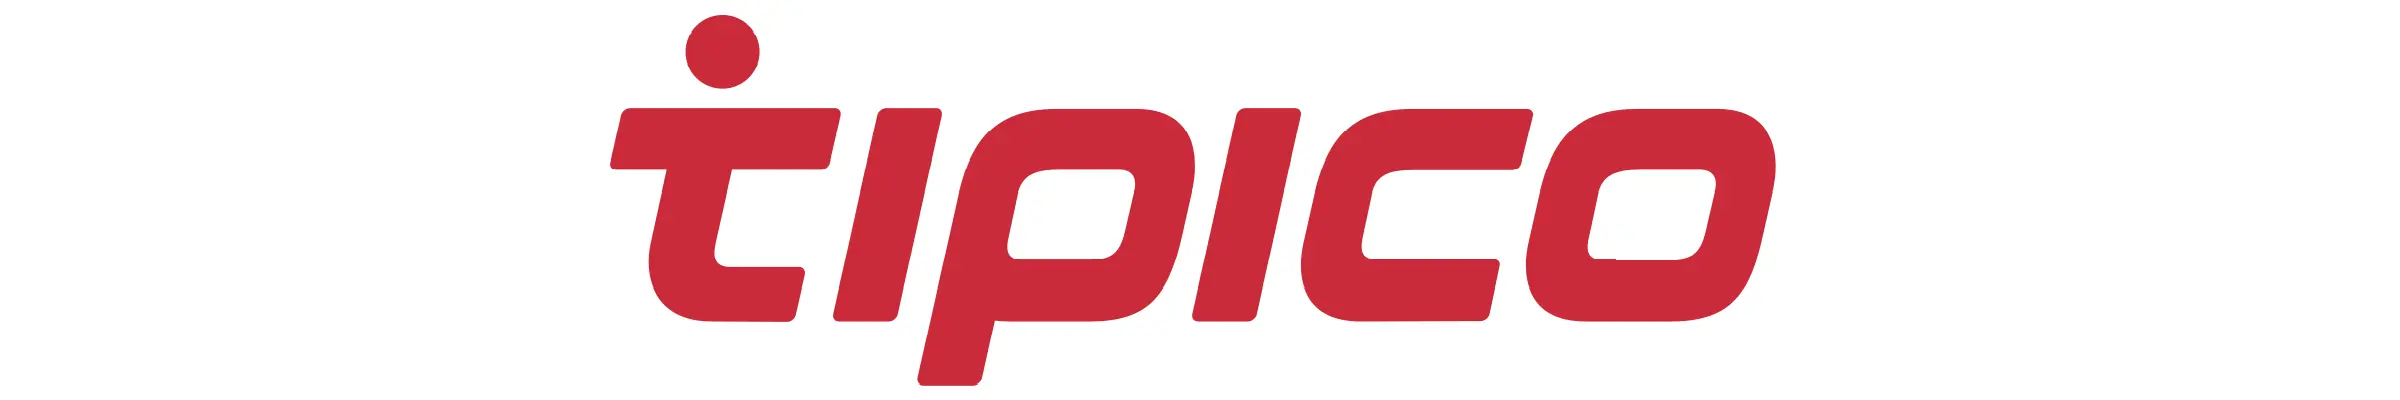 Tipico Sportsbook Large wide logo